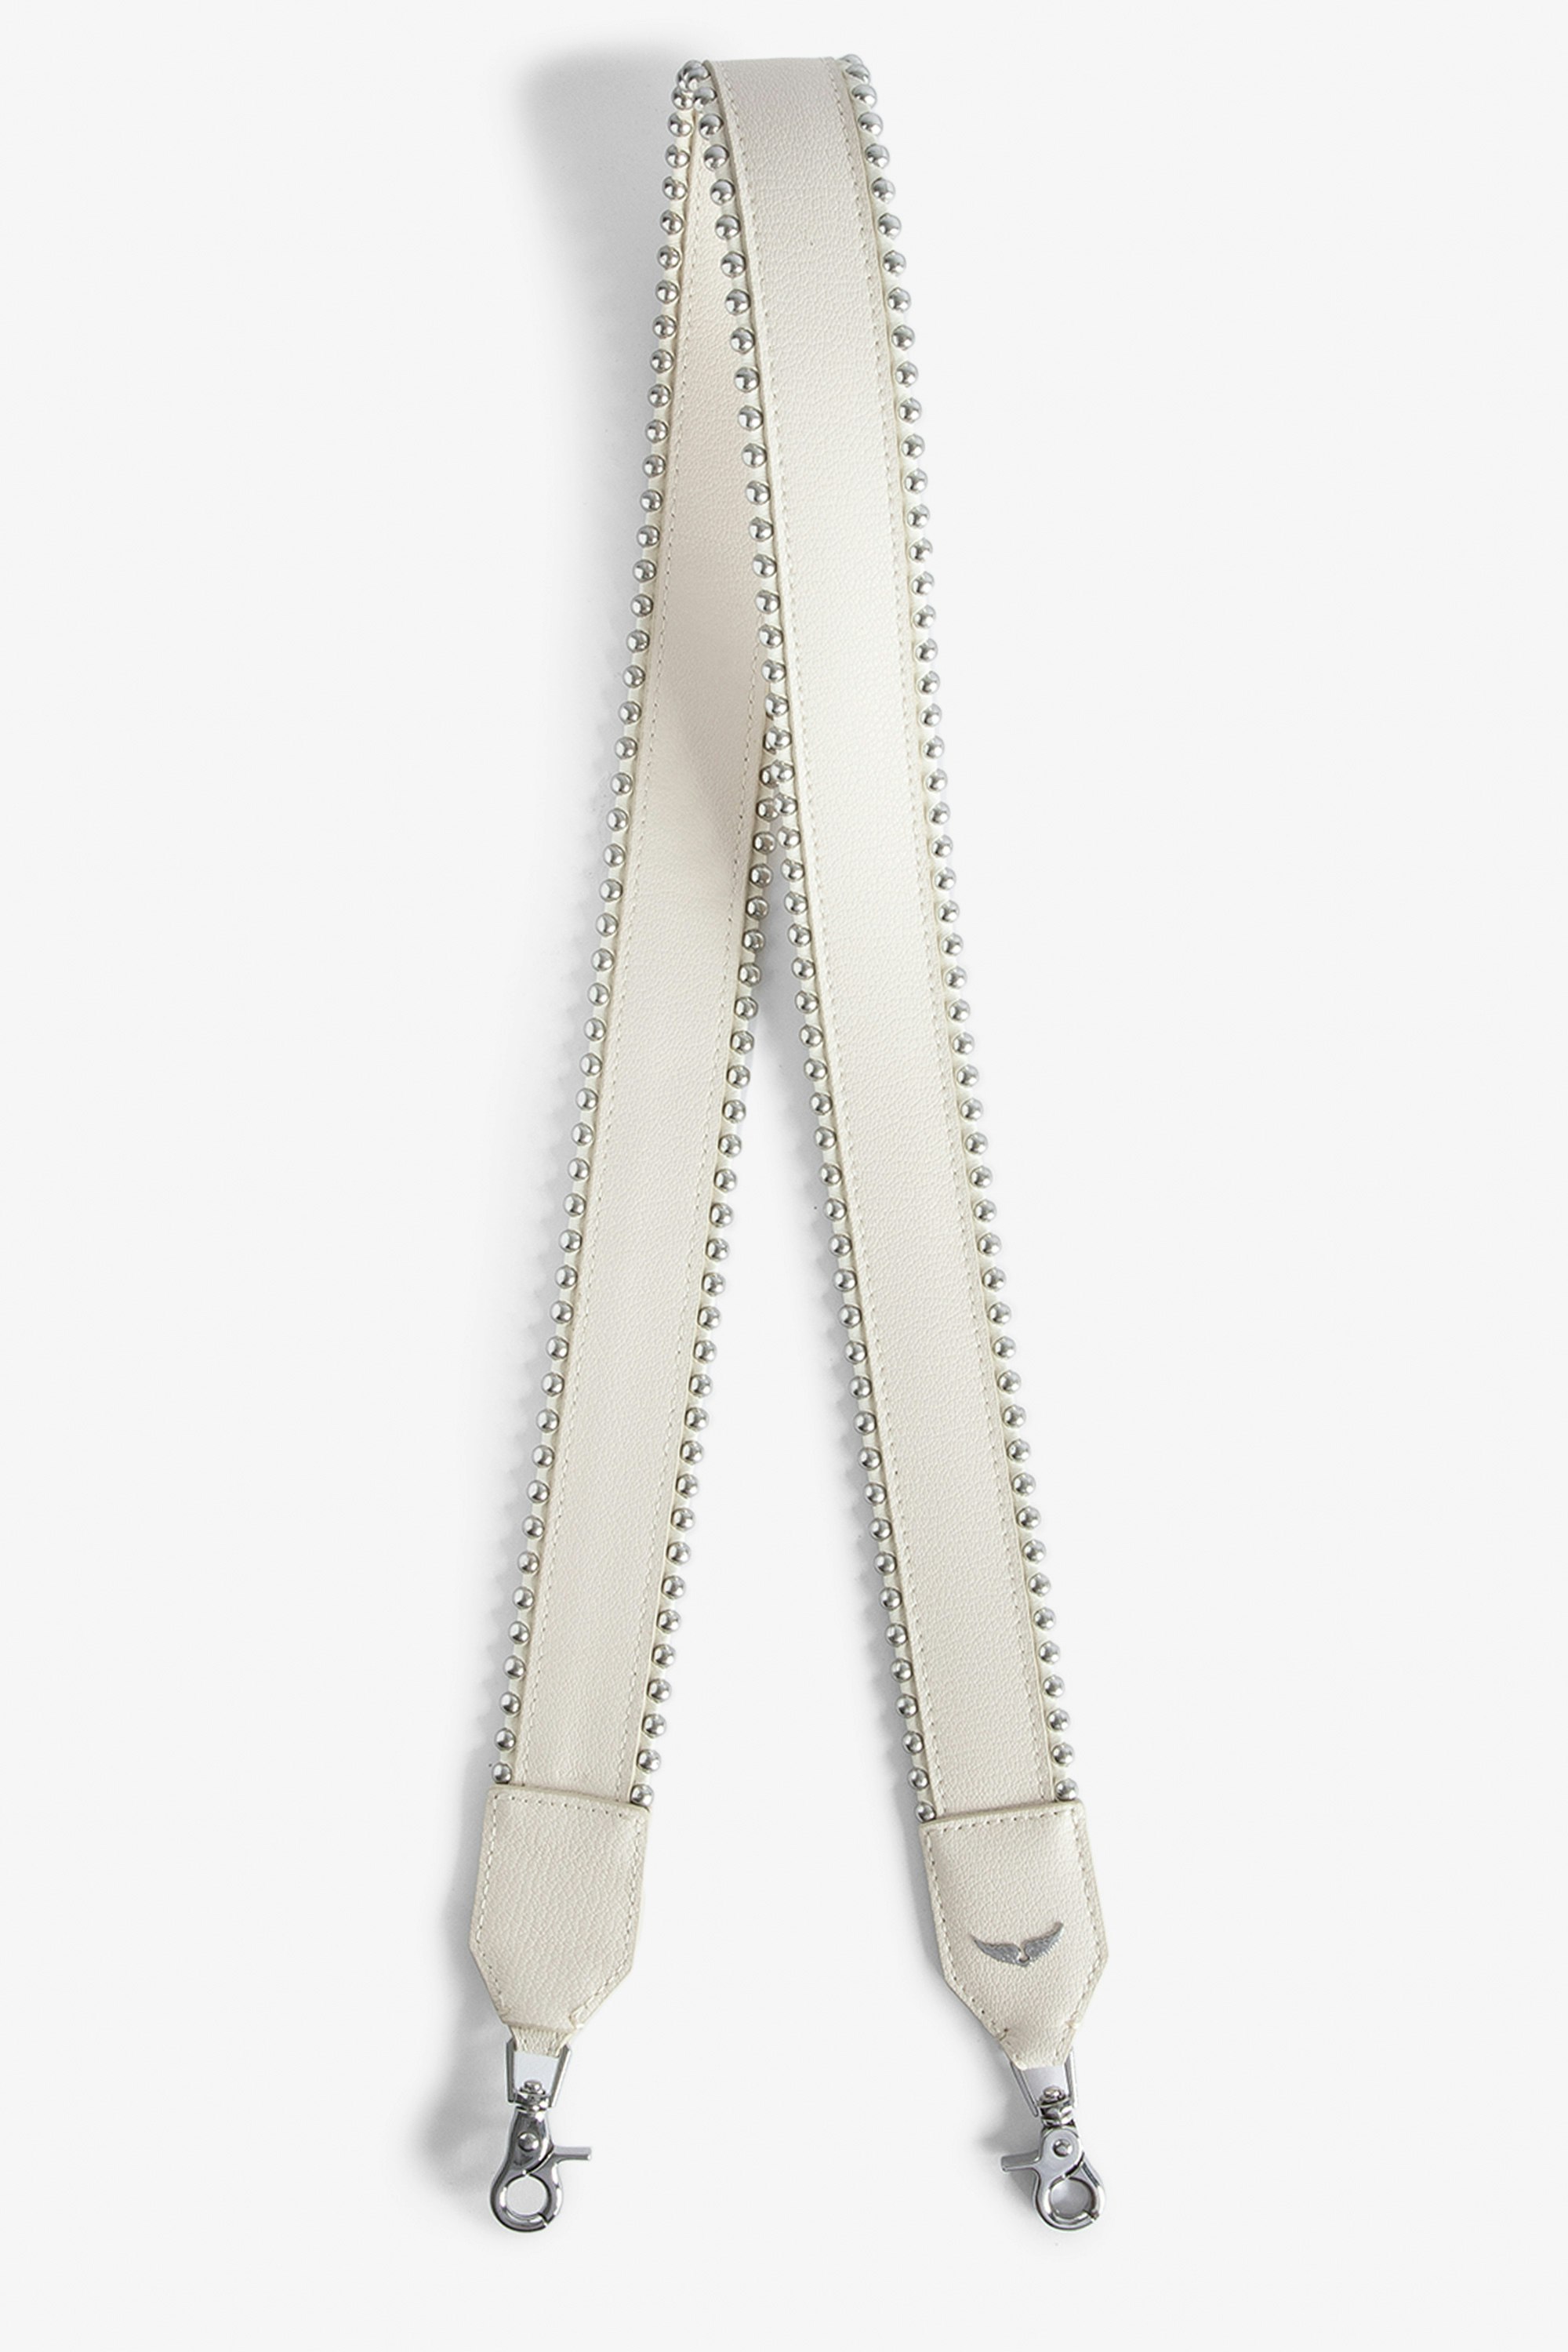 Studs Piping Shoulder Strap - Women’s adjustable ecru grained leather shoulder strap with studded trim.